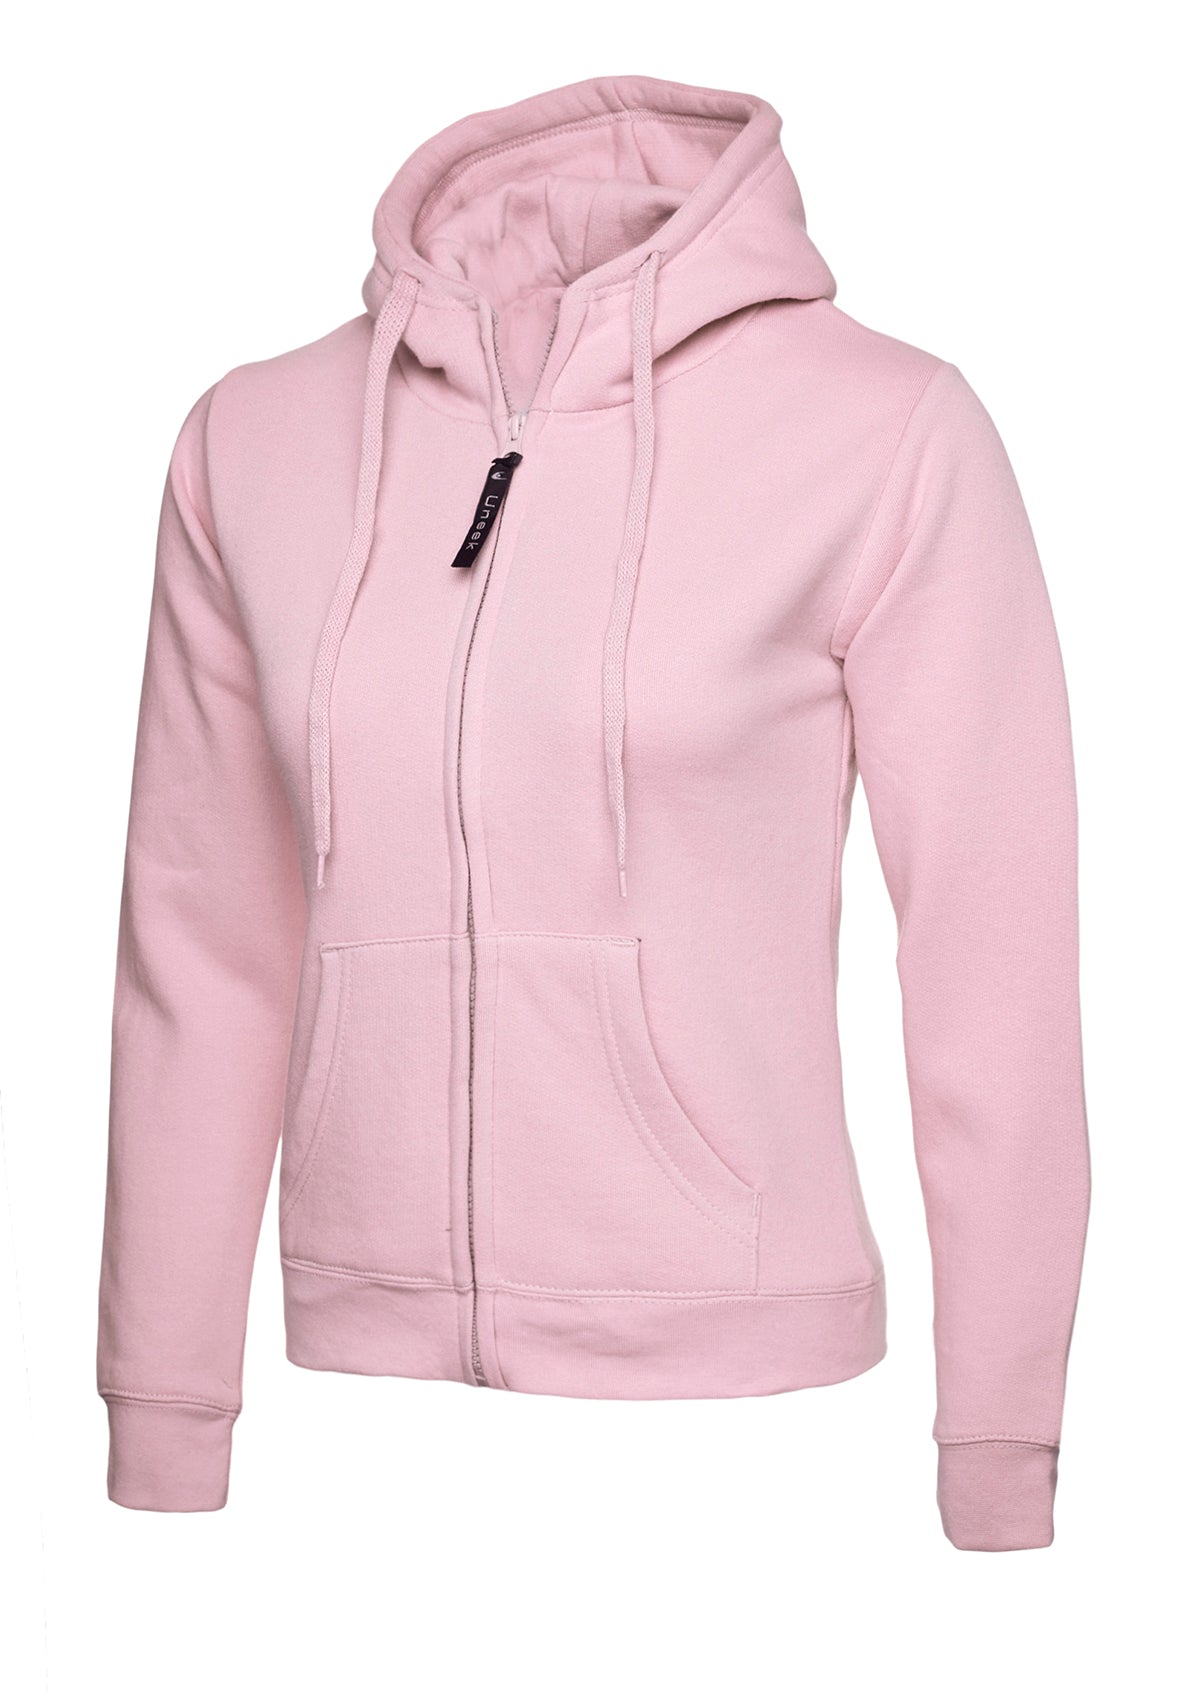 Uneek Ladies Classic Full Zip Hooded Sweatshirt UC505 - Pink